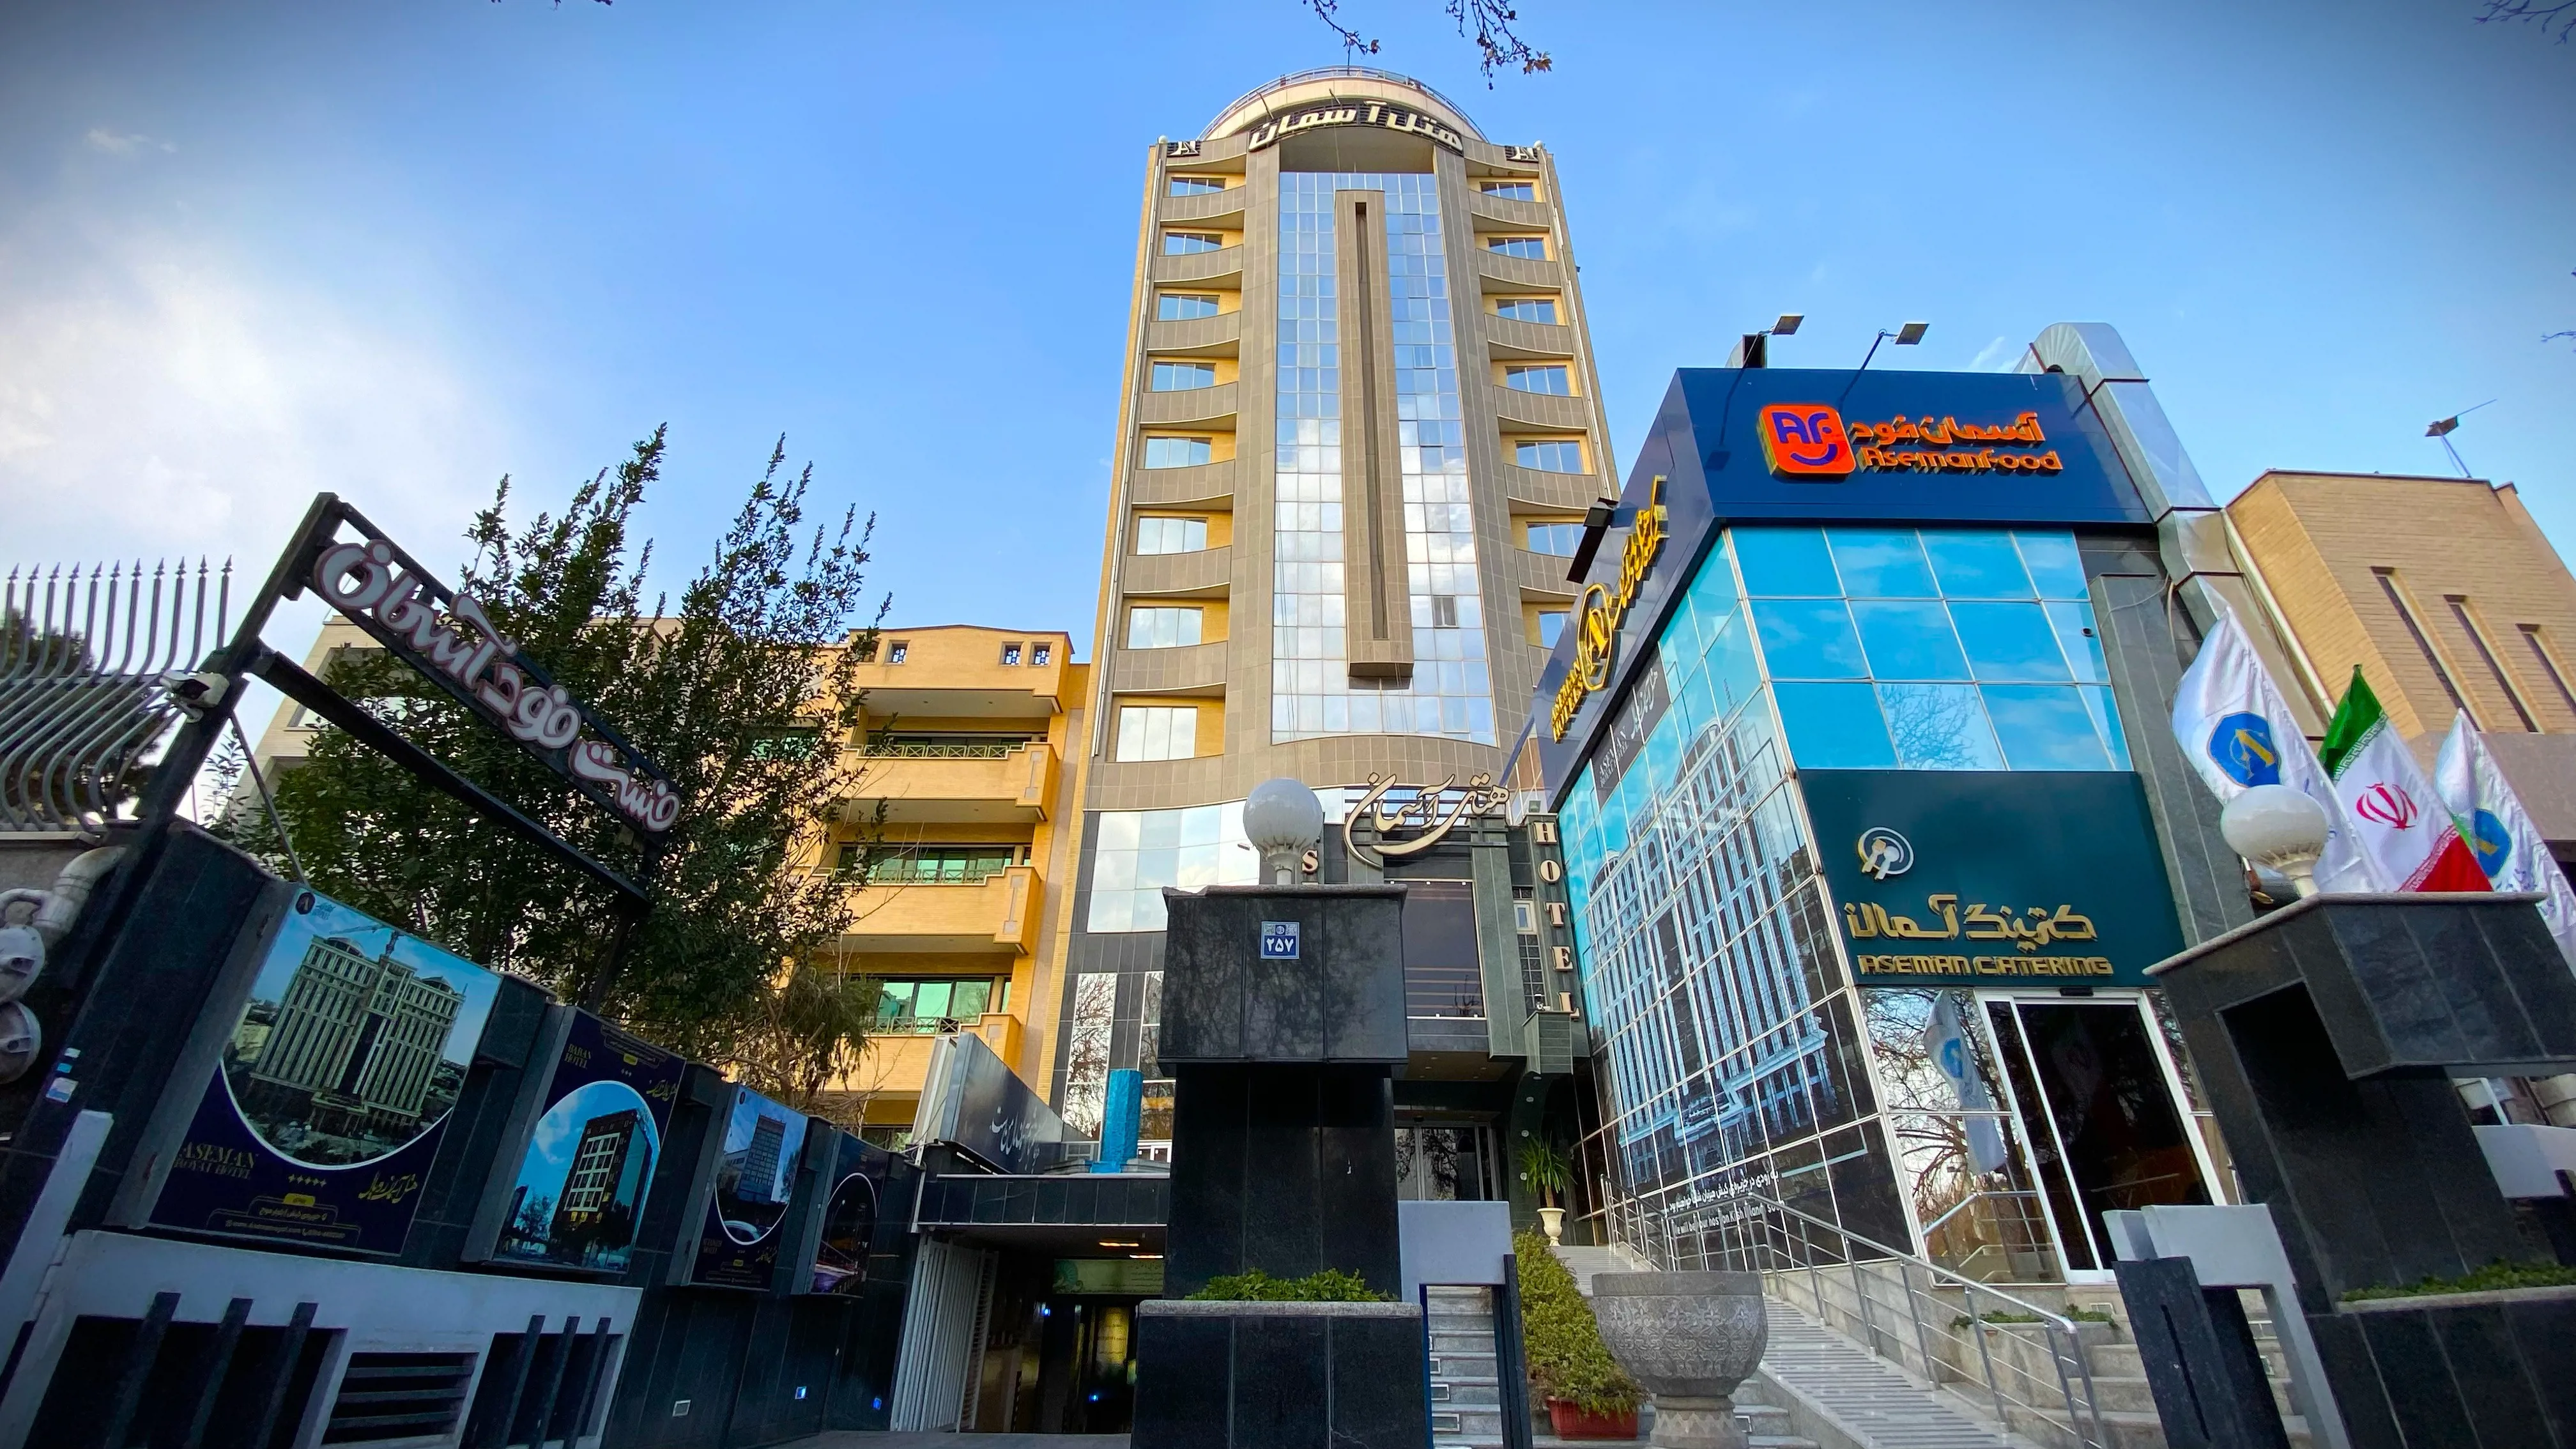 هتل آسمان اصفهان